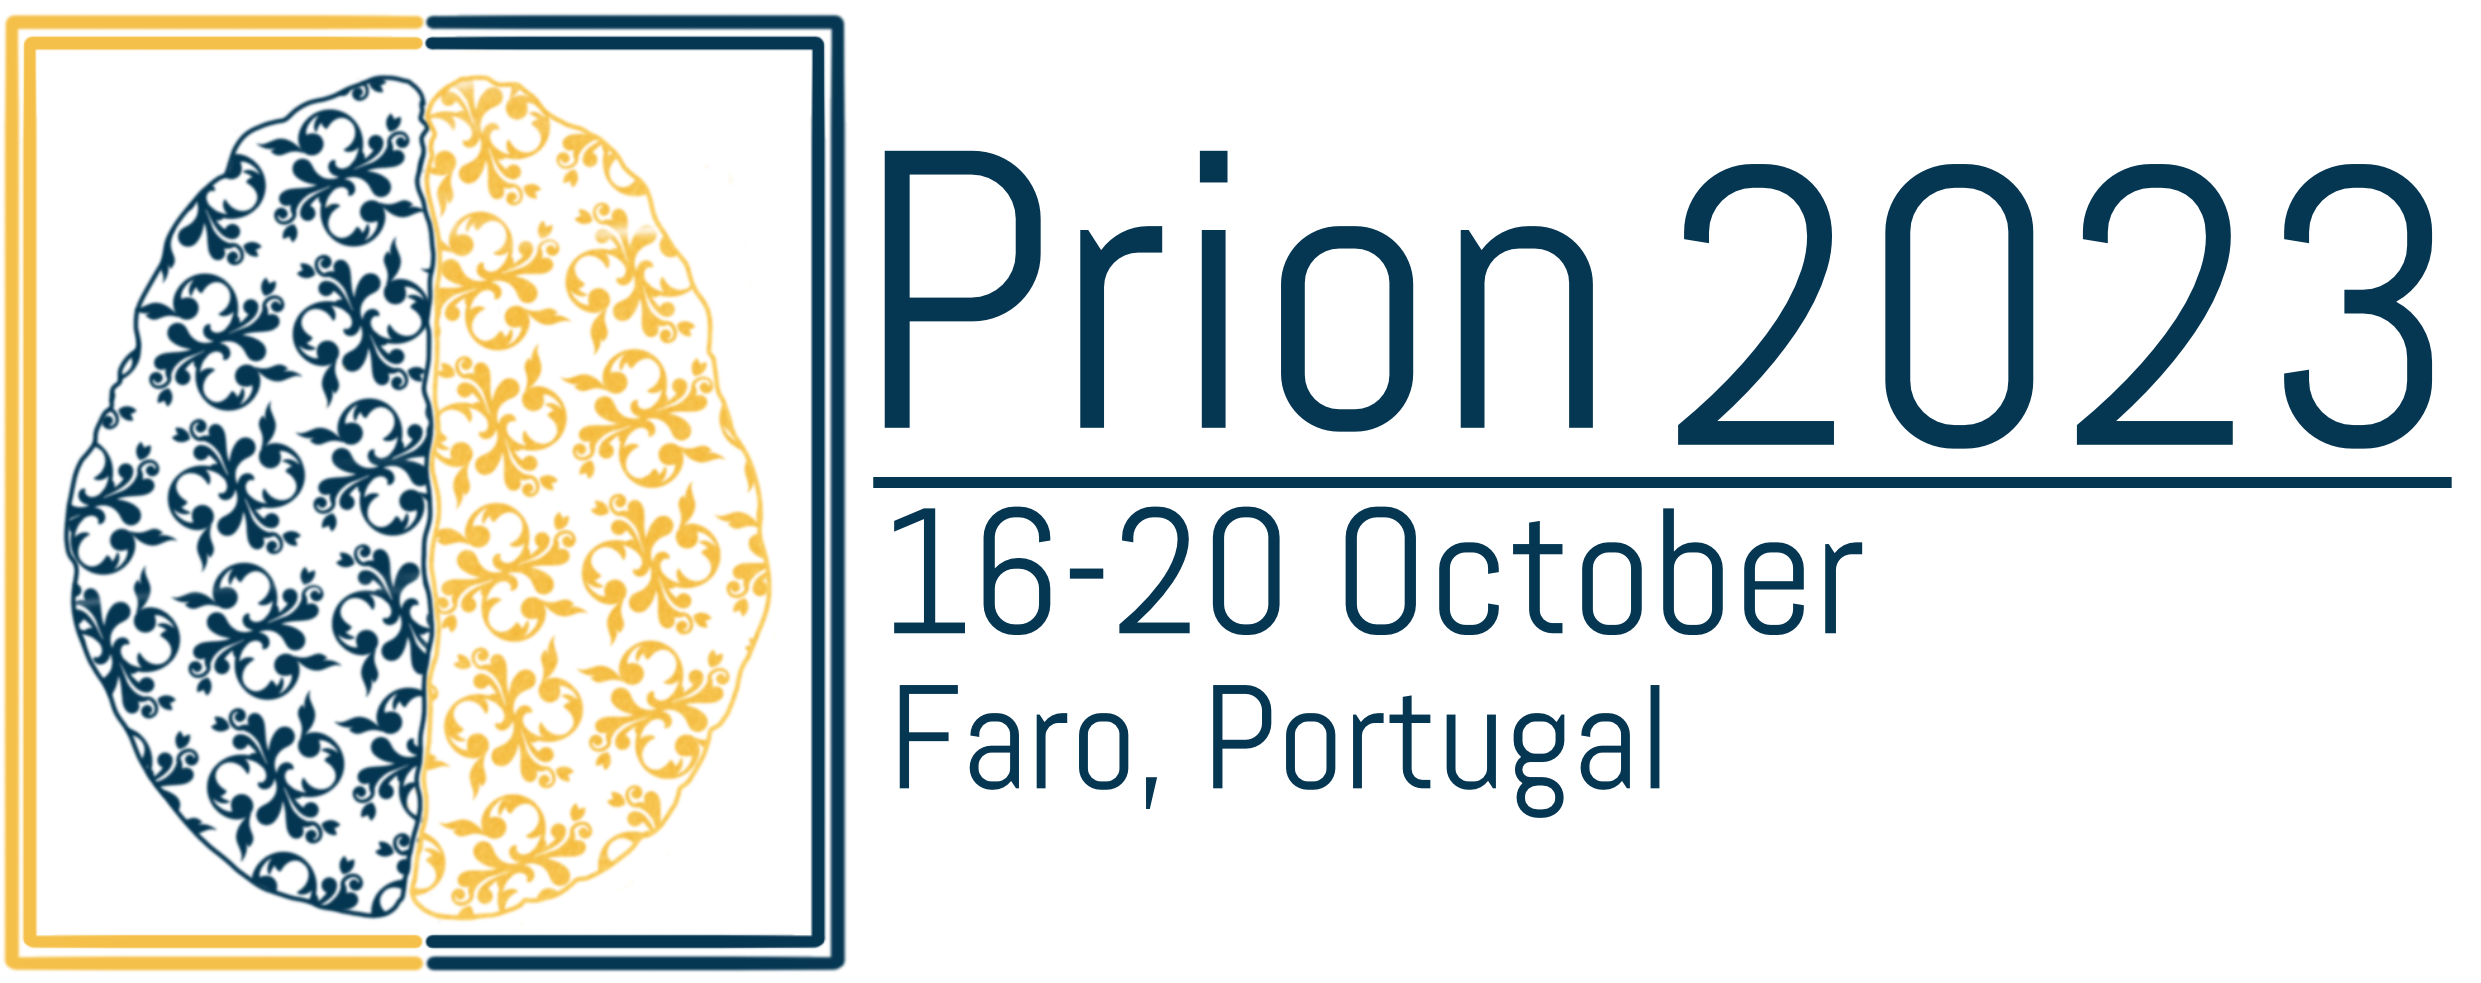 Prion 2023 Logo